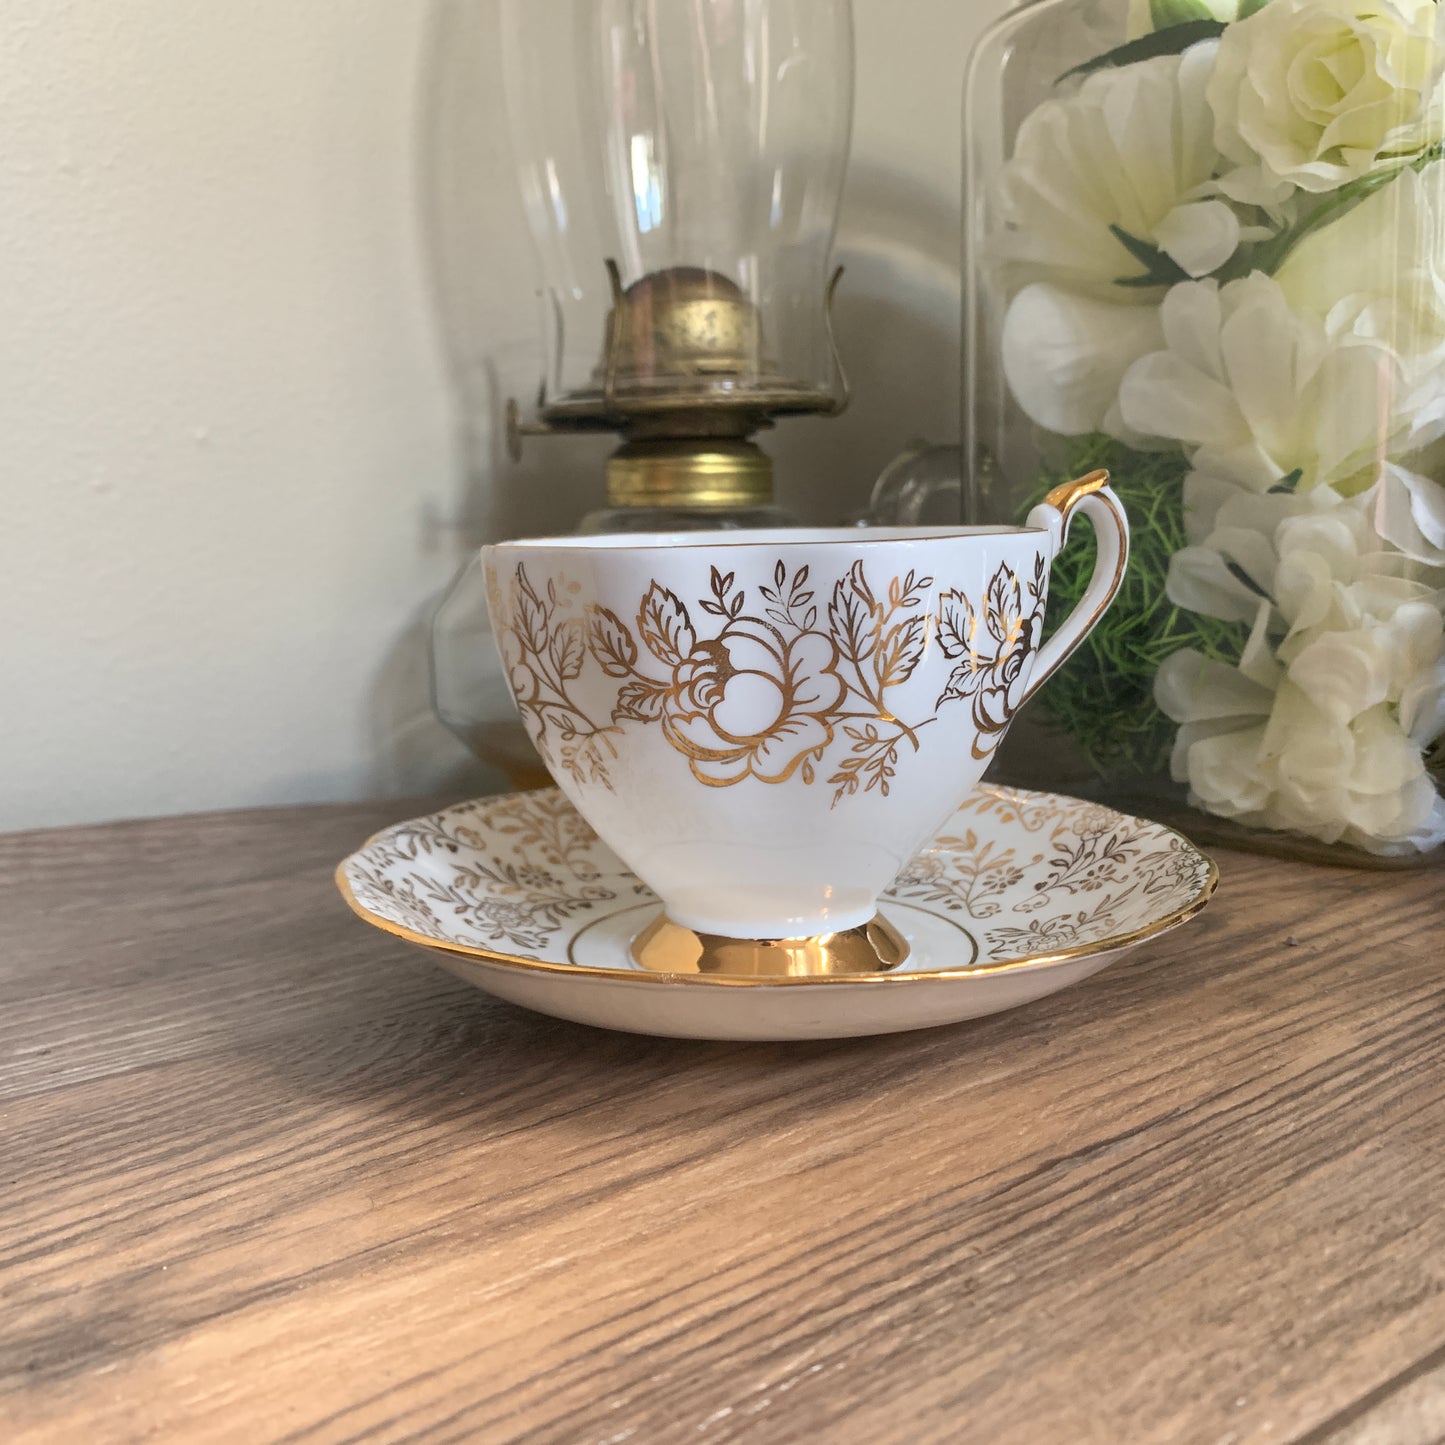 Golden Floral Vintage Queen Anne Teacup and Saucer, Slightly Mis Matched Tea Cup